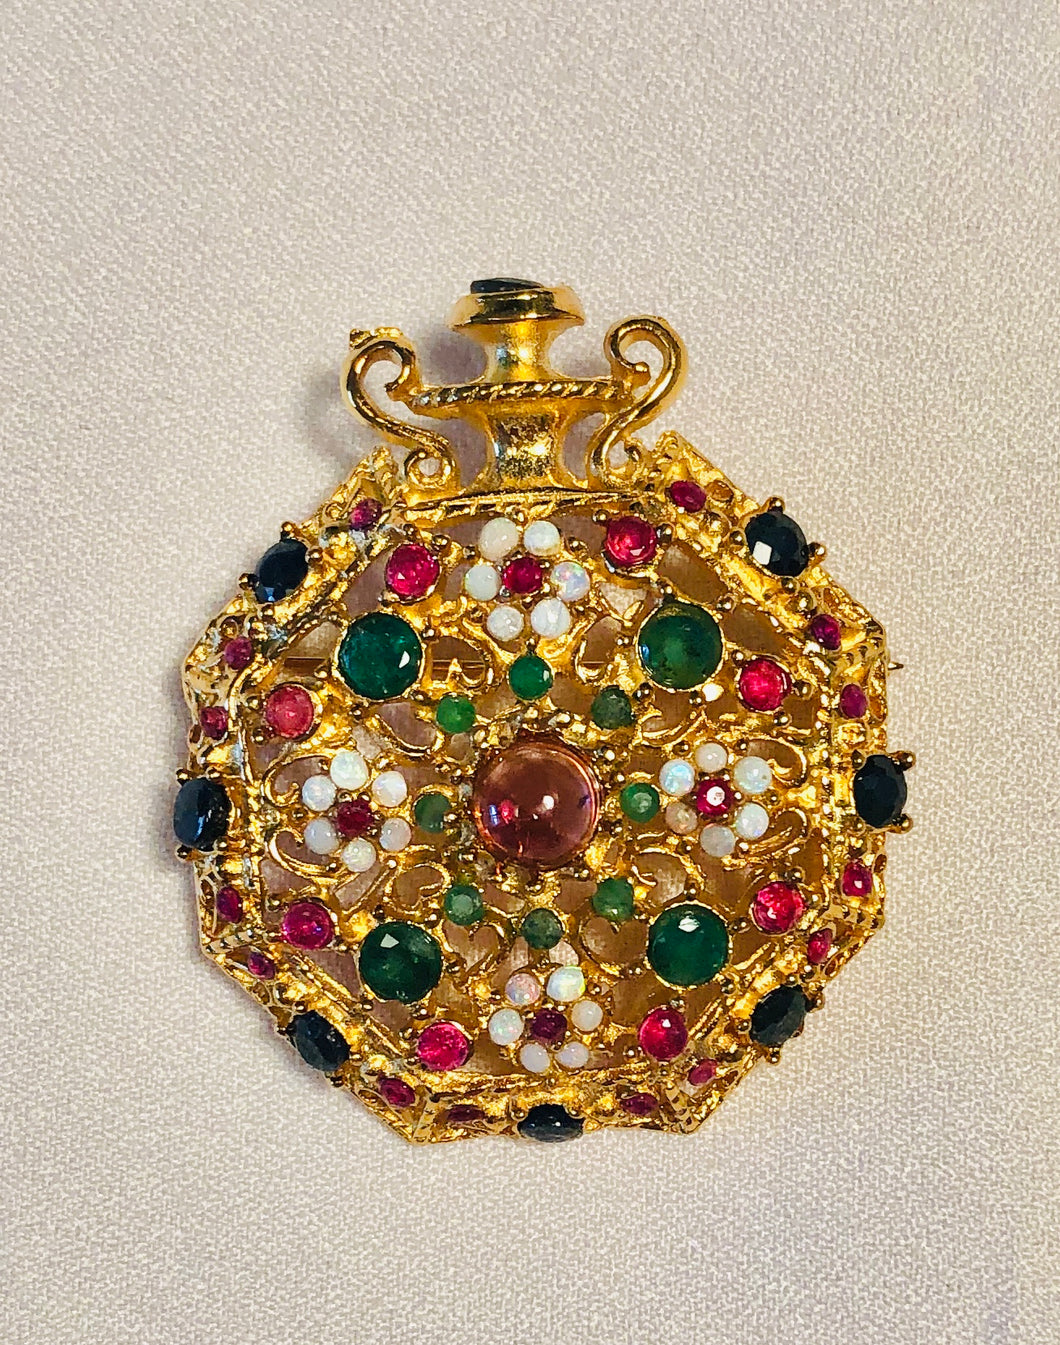 Genuine Ruby, Emerald, Sapphire, Opal and Amethyst Chain Watch Brooch